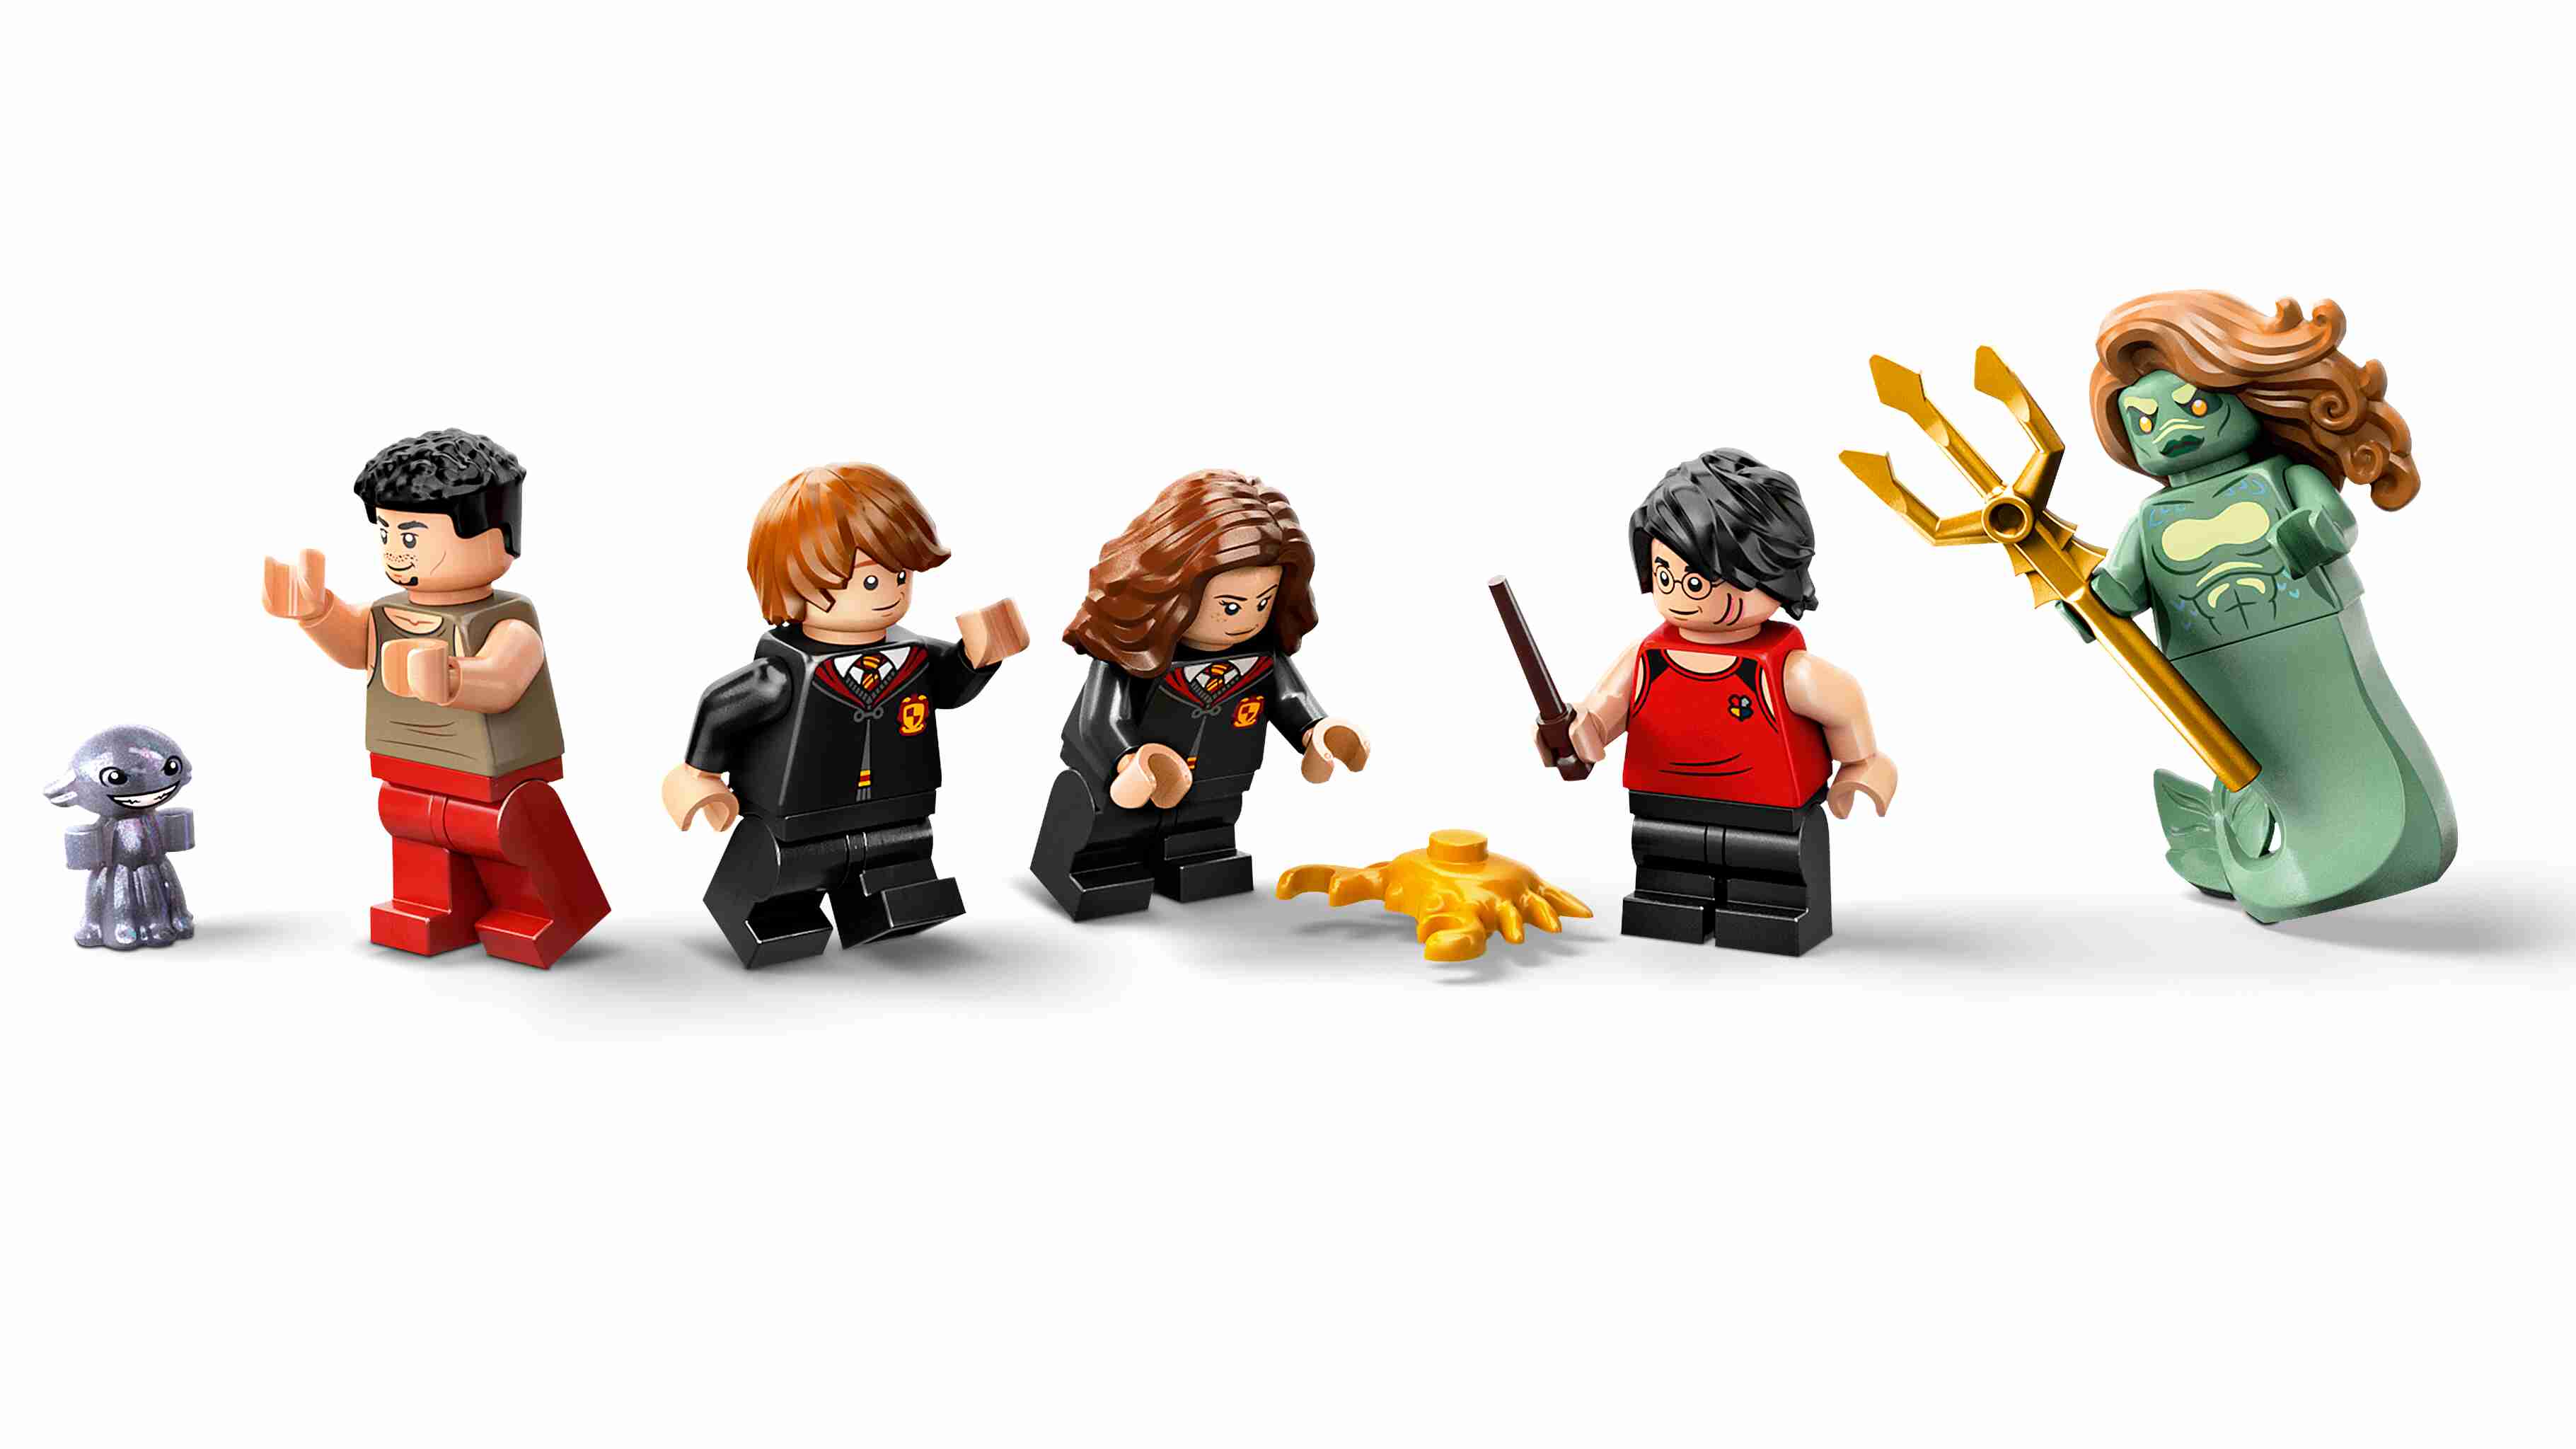 LEGO 76420 Harry Potter Trimagisches Turnier: Der Schwarze See, 7 Figuren